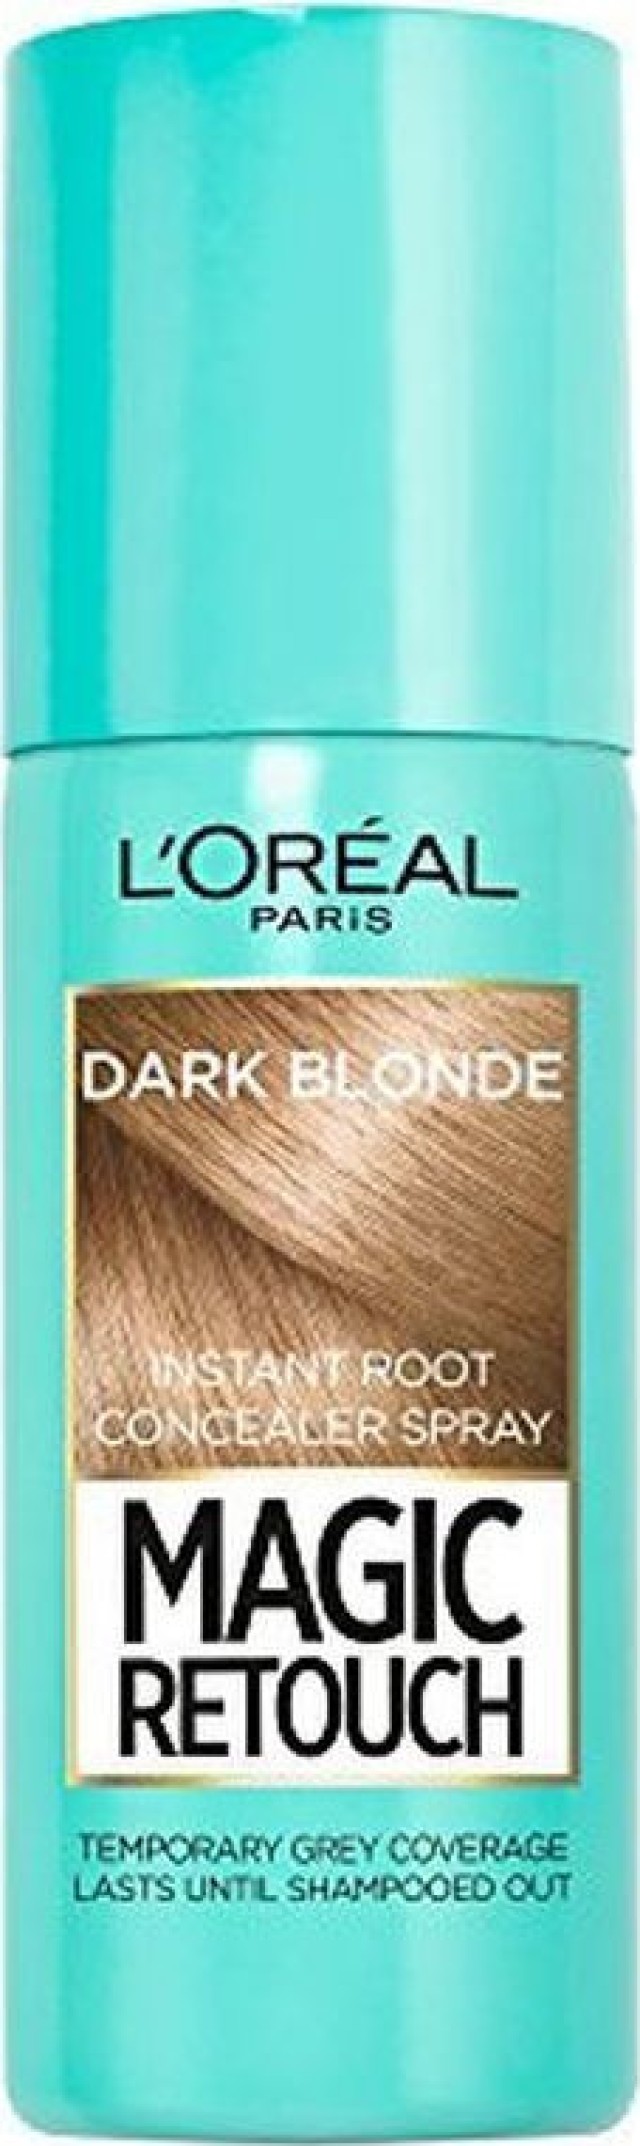 LOreal Paris Magic Retouch 4 Dark Blond 75ml